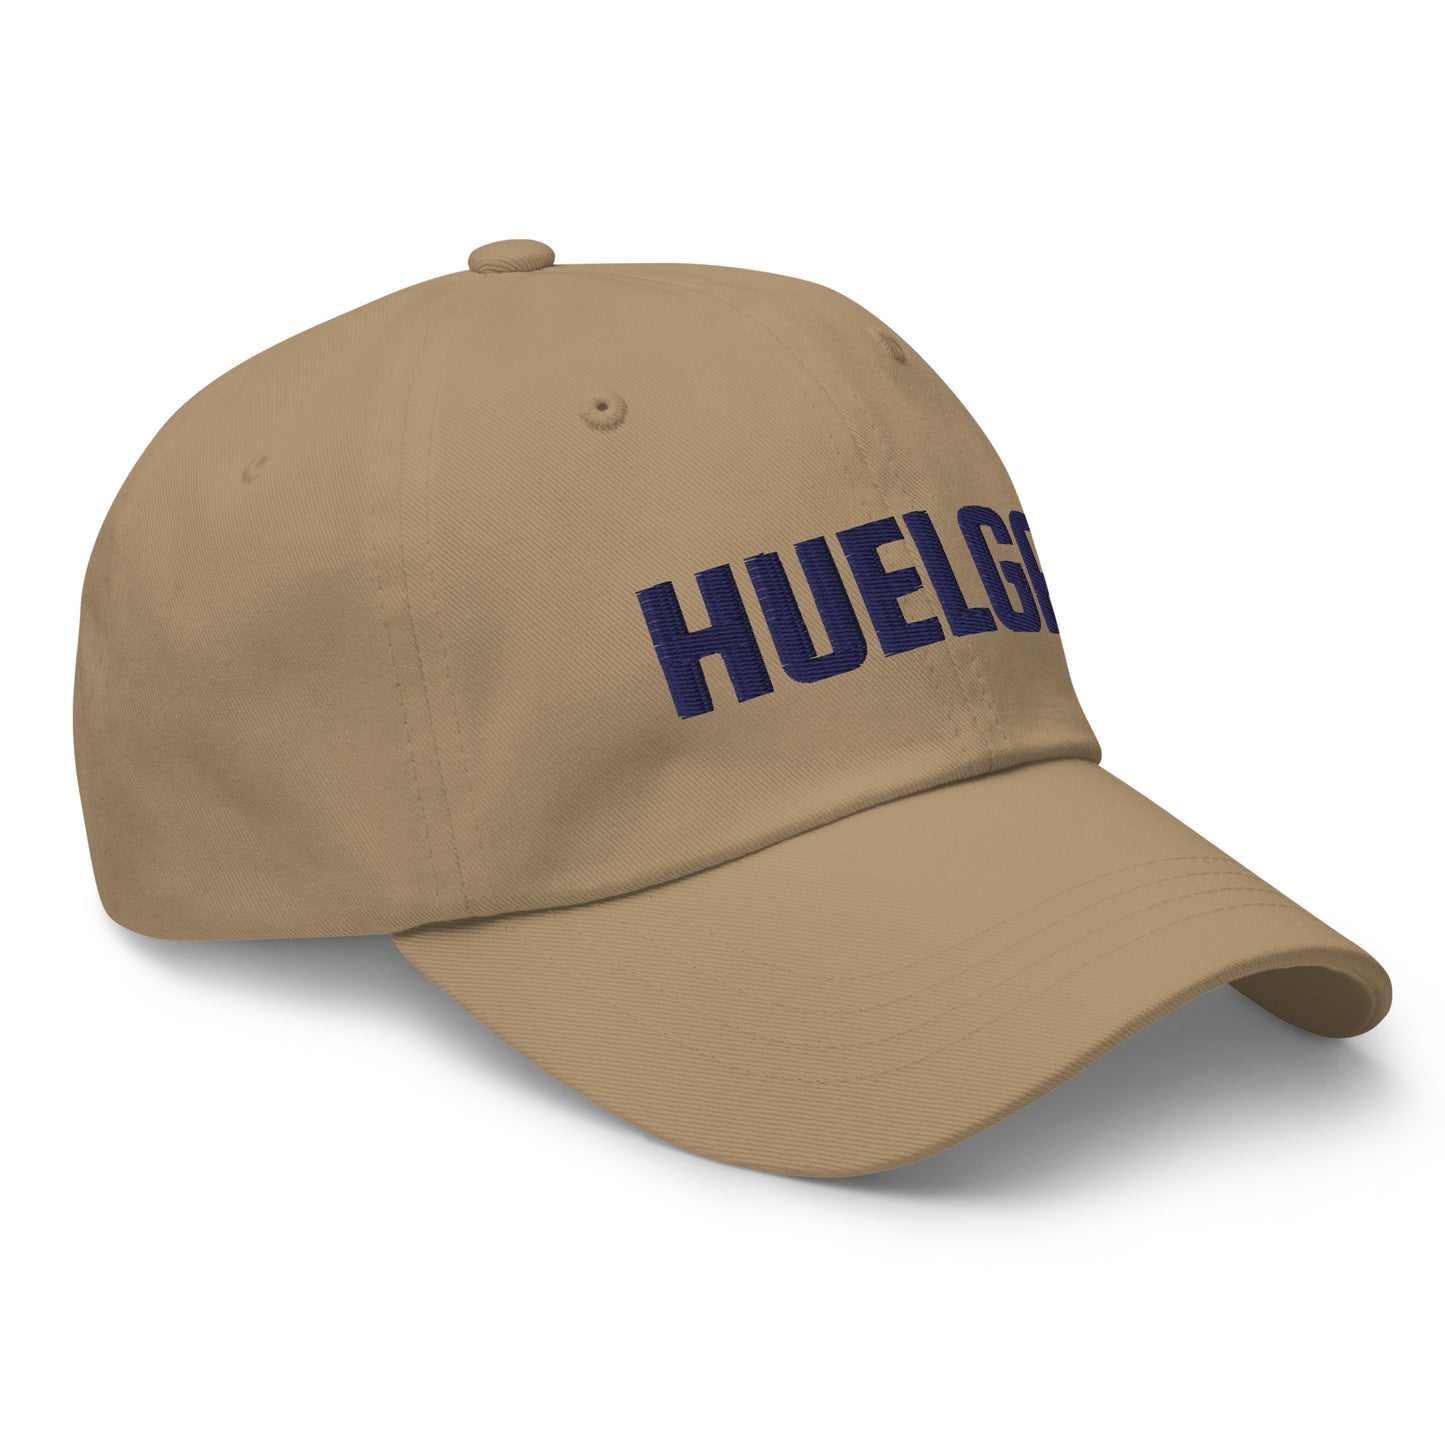 UFW® - Huelga Hat (Sand)